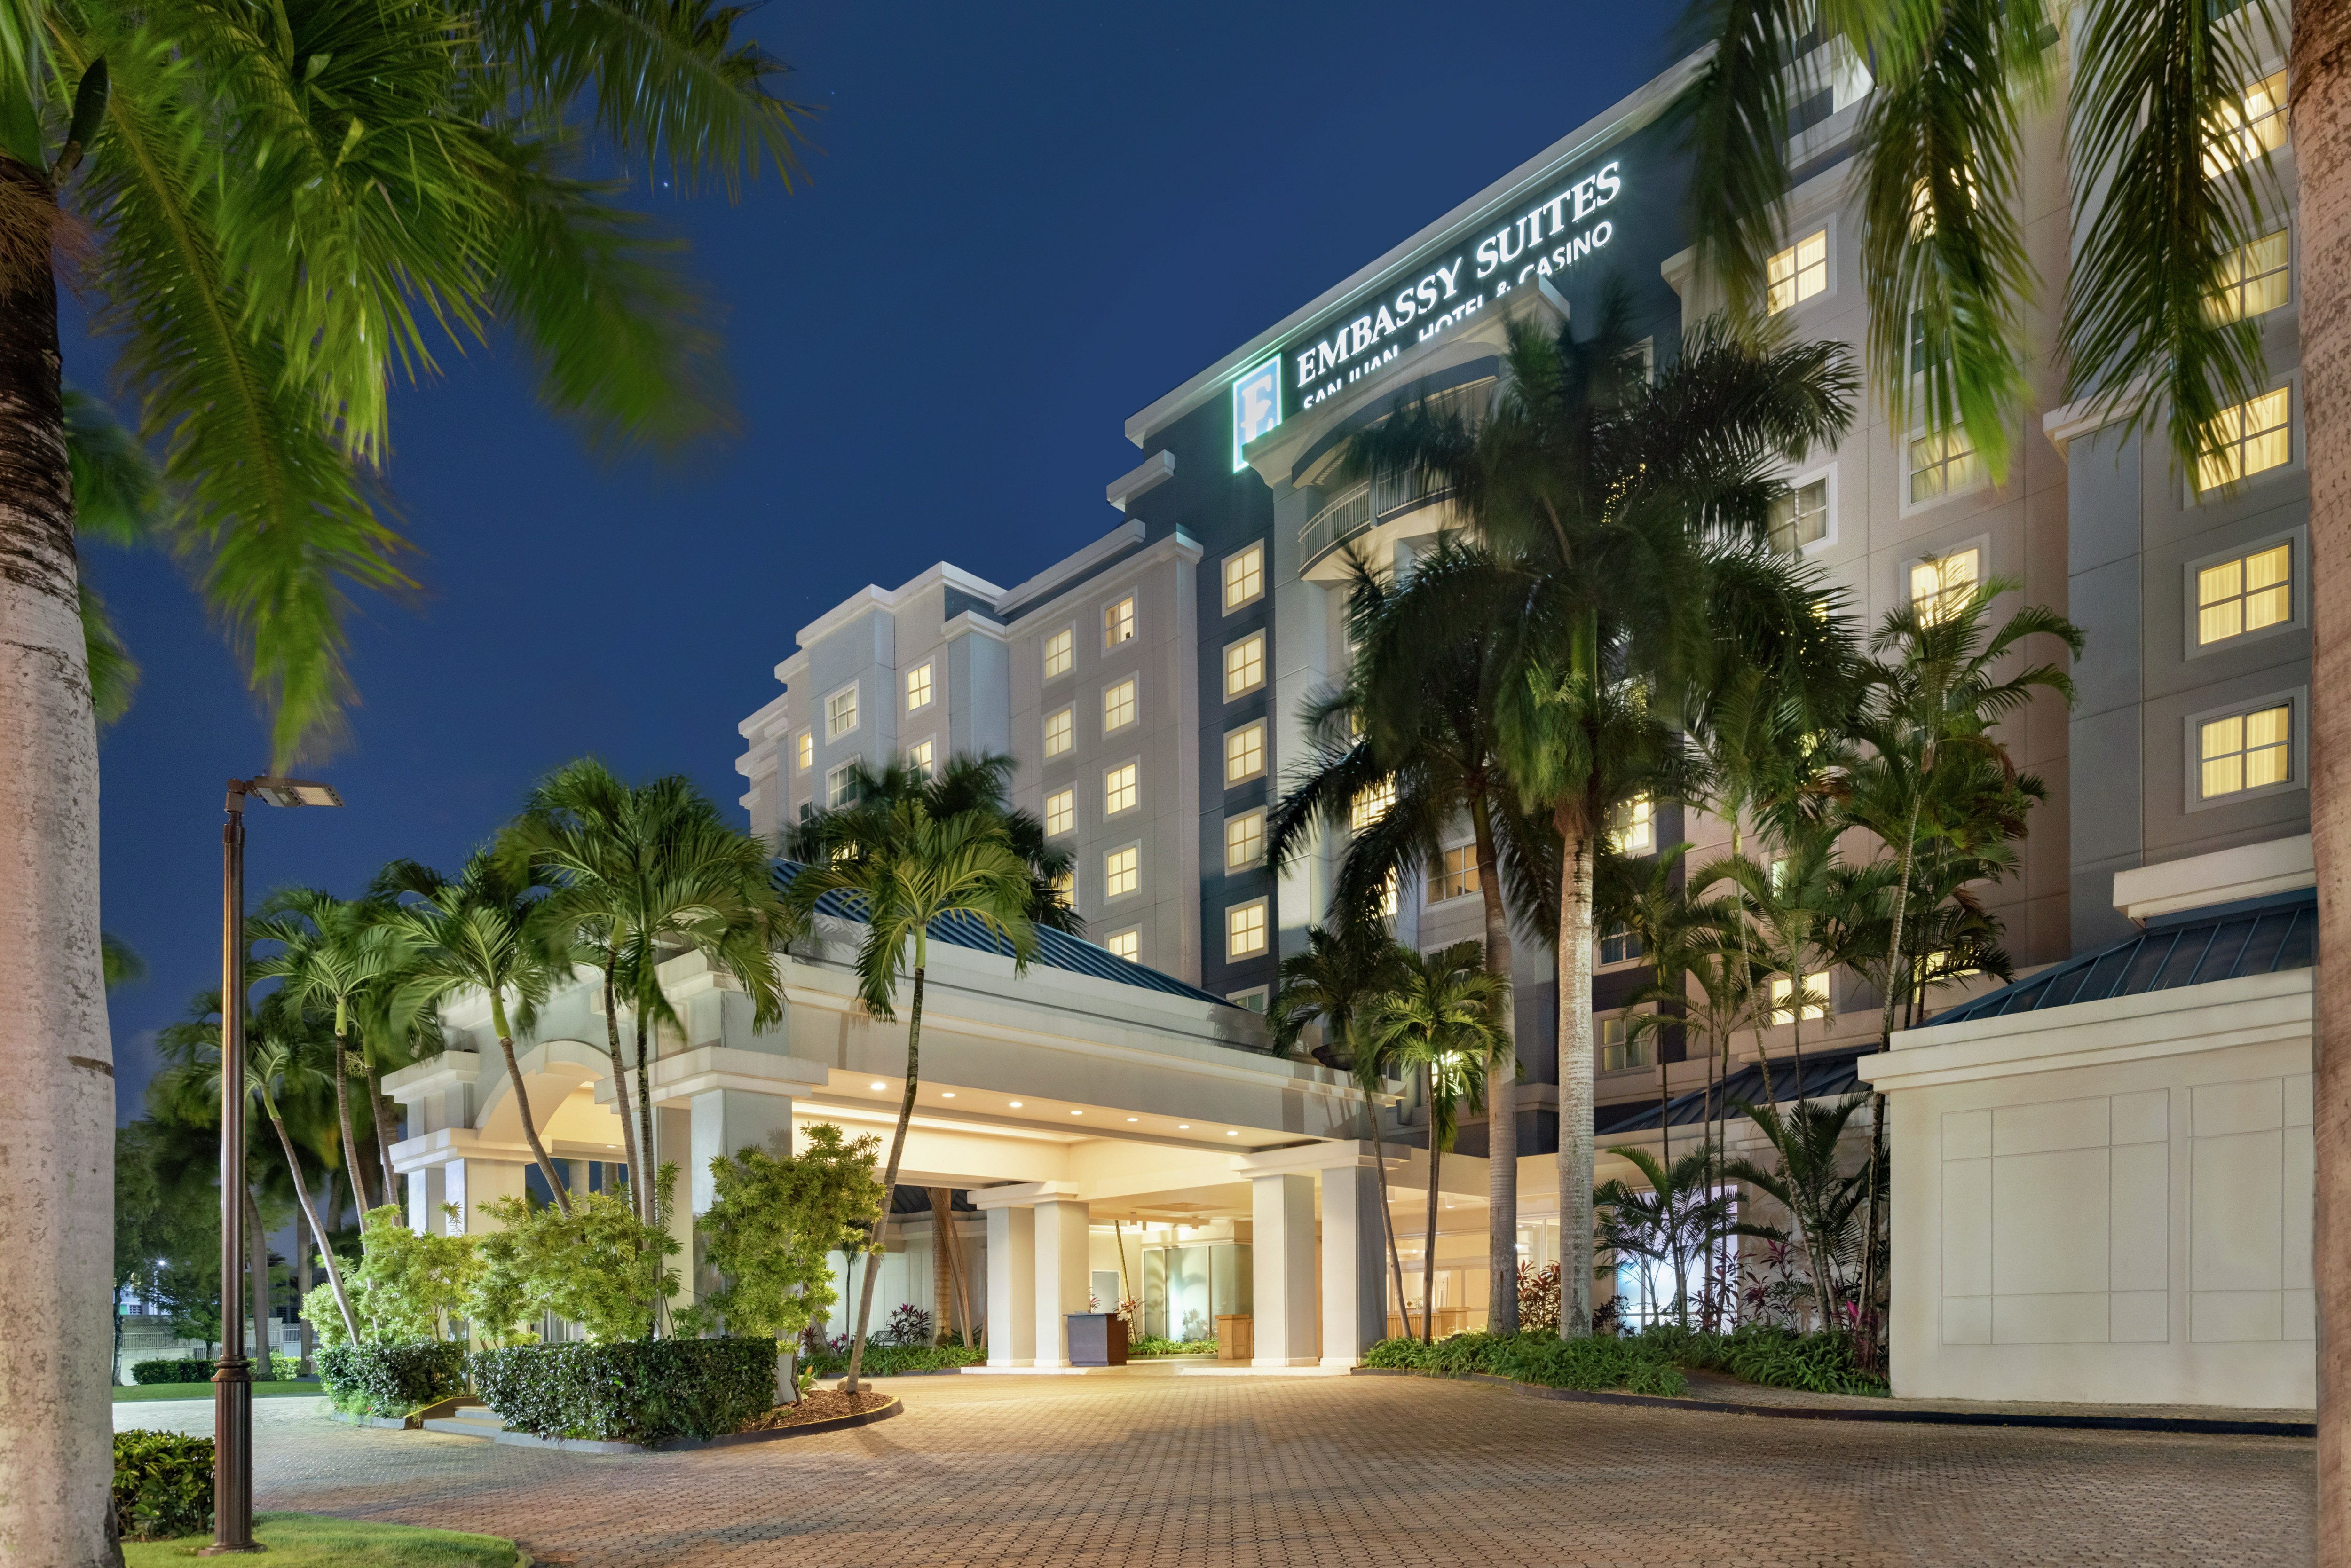 Photo of Embassy Suites by Hilton San Juan Hotel & Casino, Carolina - San Juan, PR